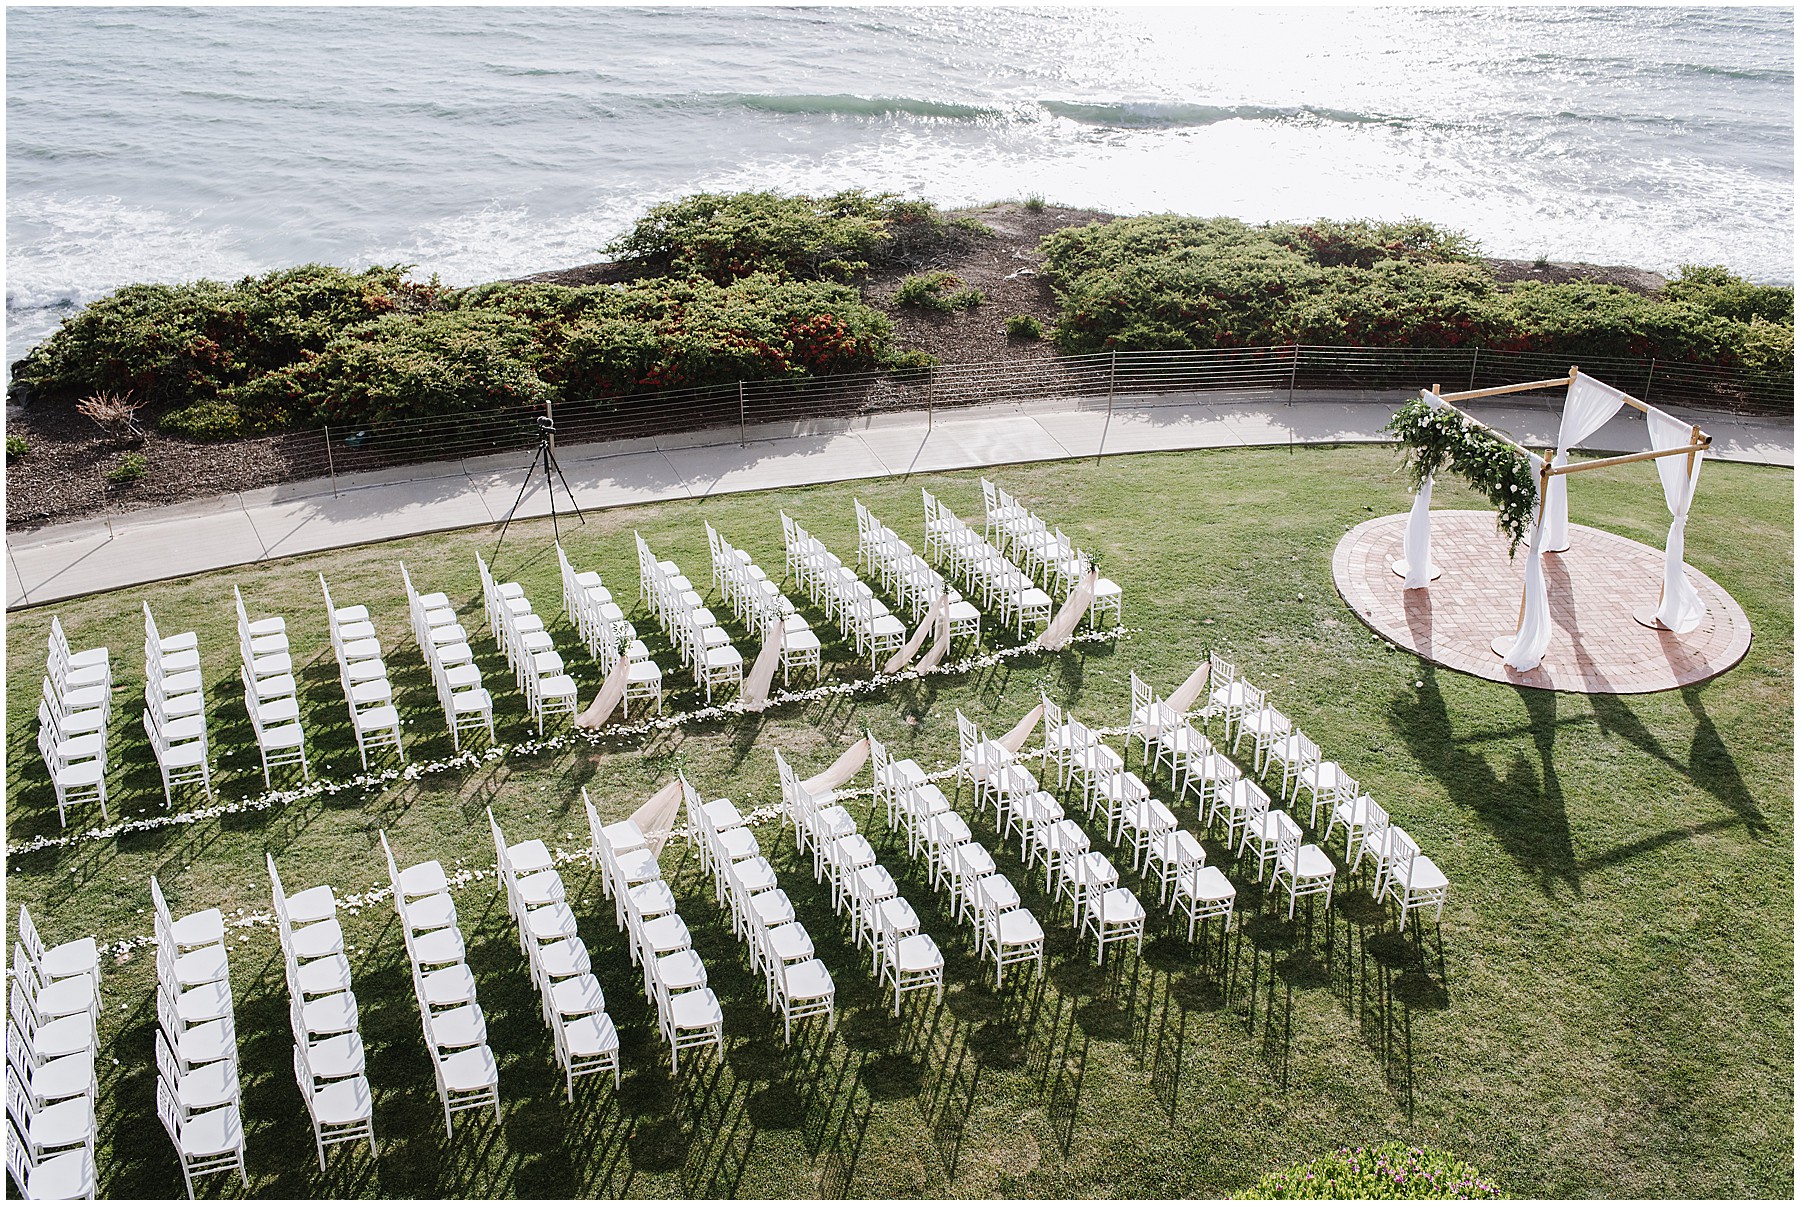 The Cliffs Resort Winter Wedding in Shell Beach, California